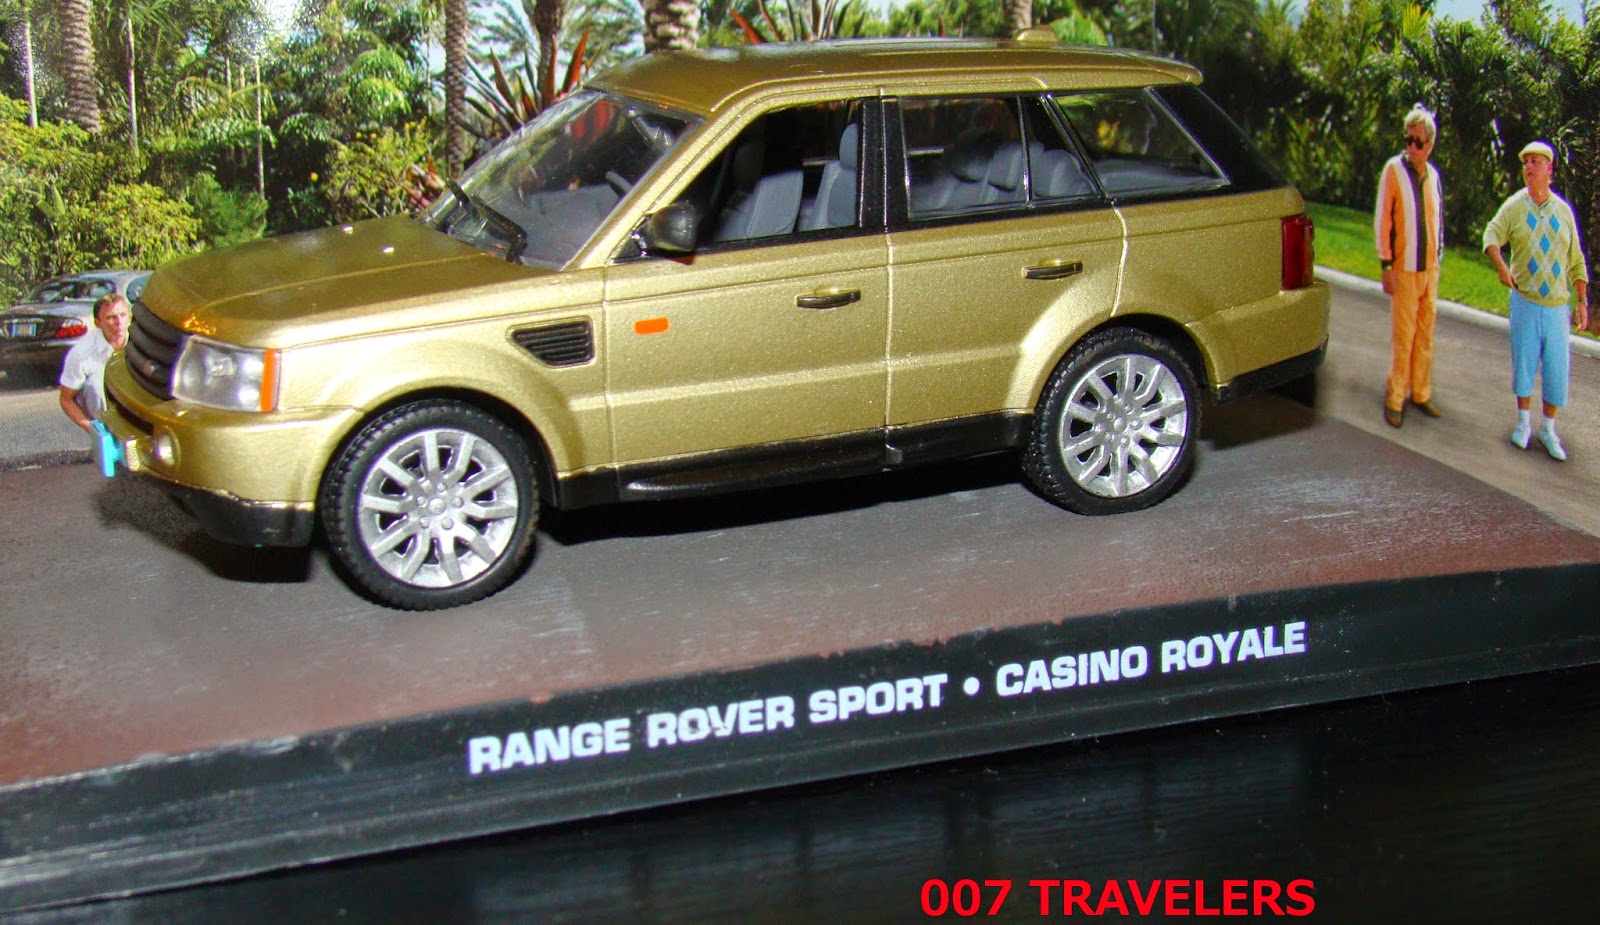 James Bond Range Rover Sport Casino Royale New in sealed pack 